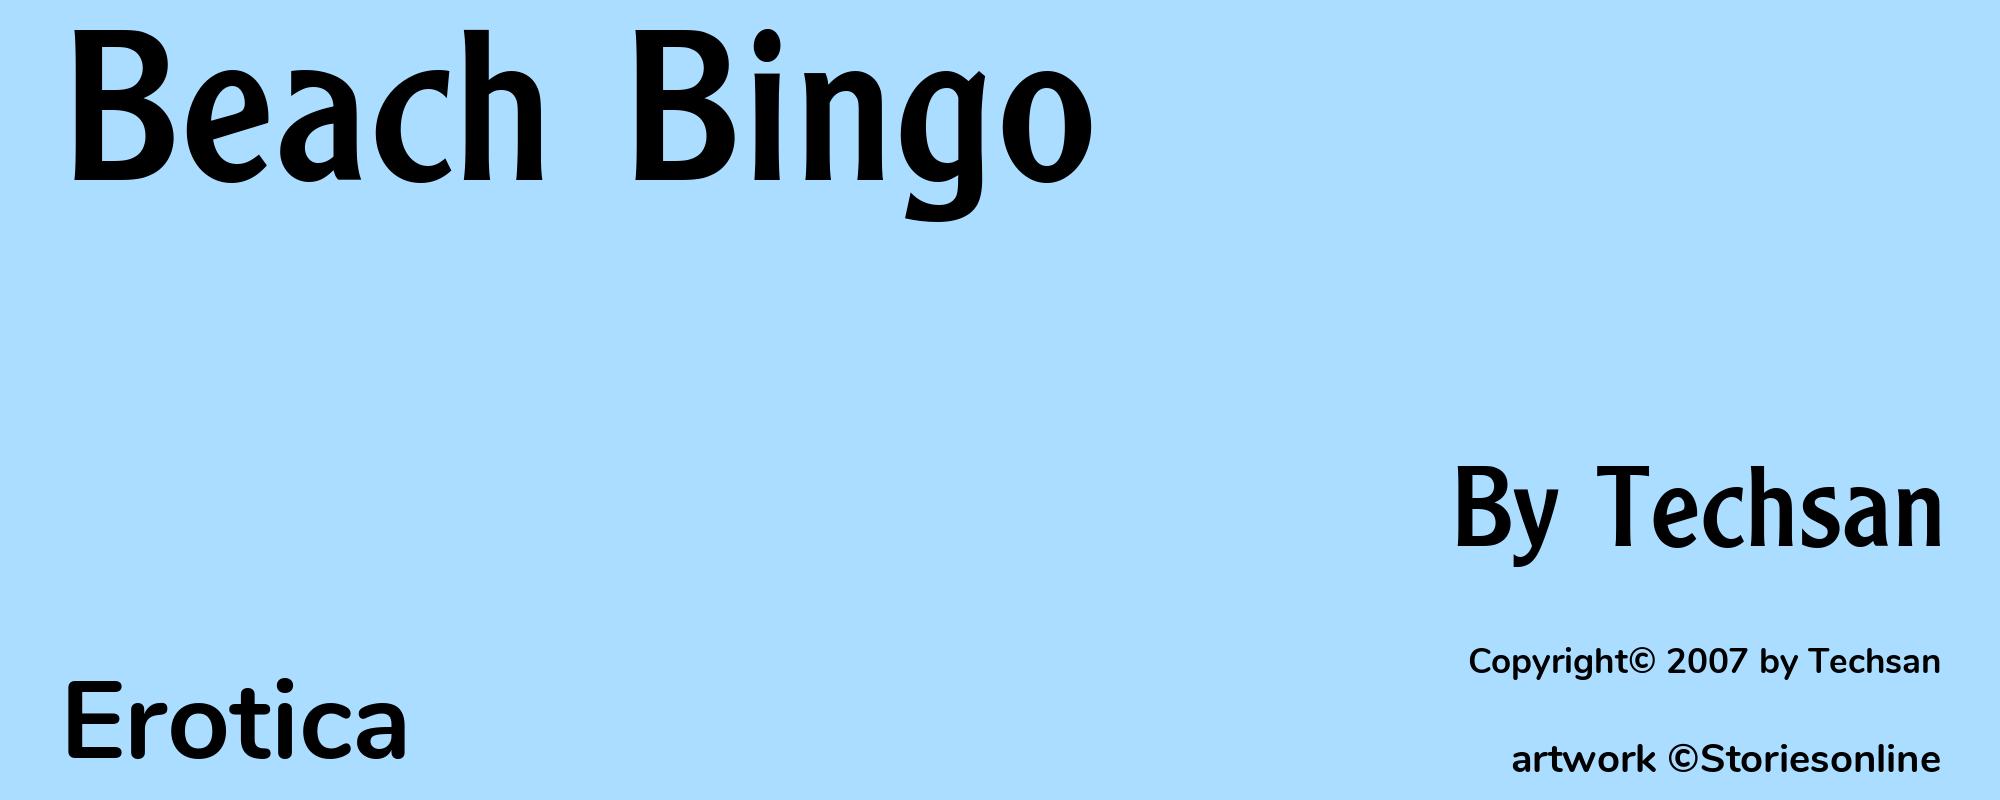 Beach Bingo - Cover